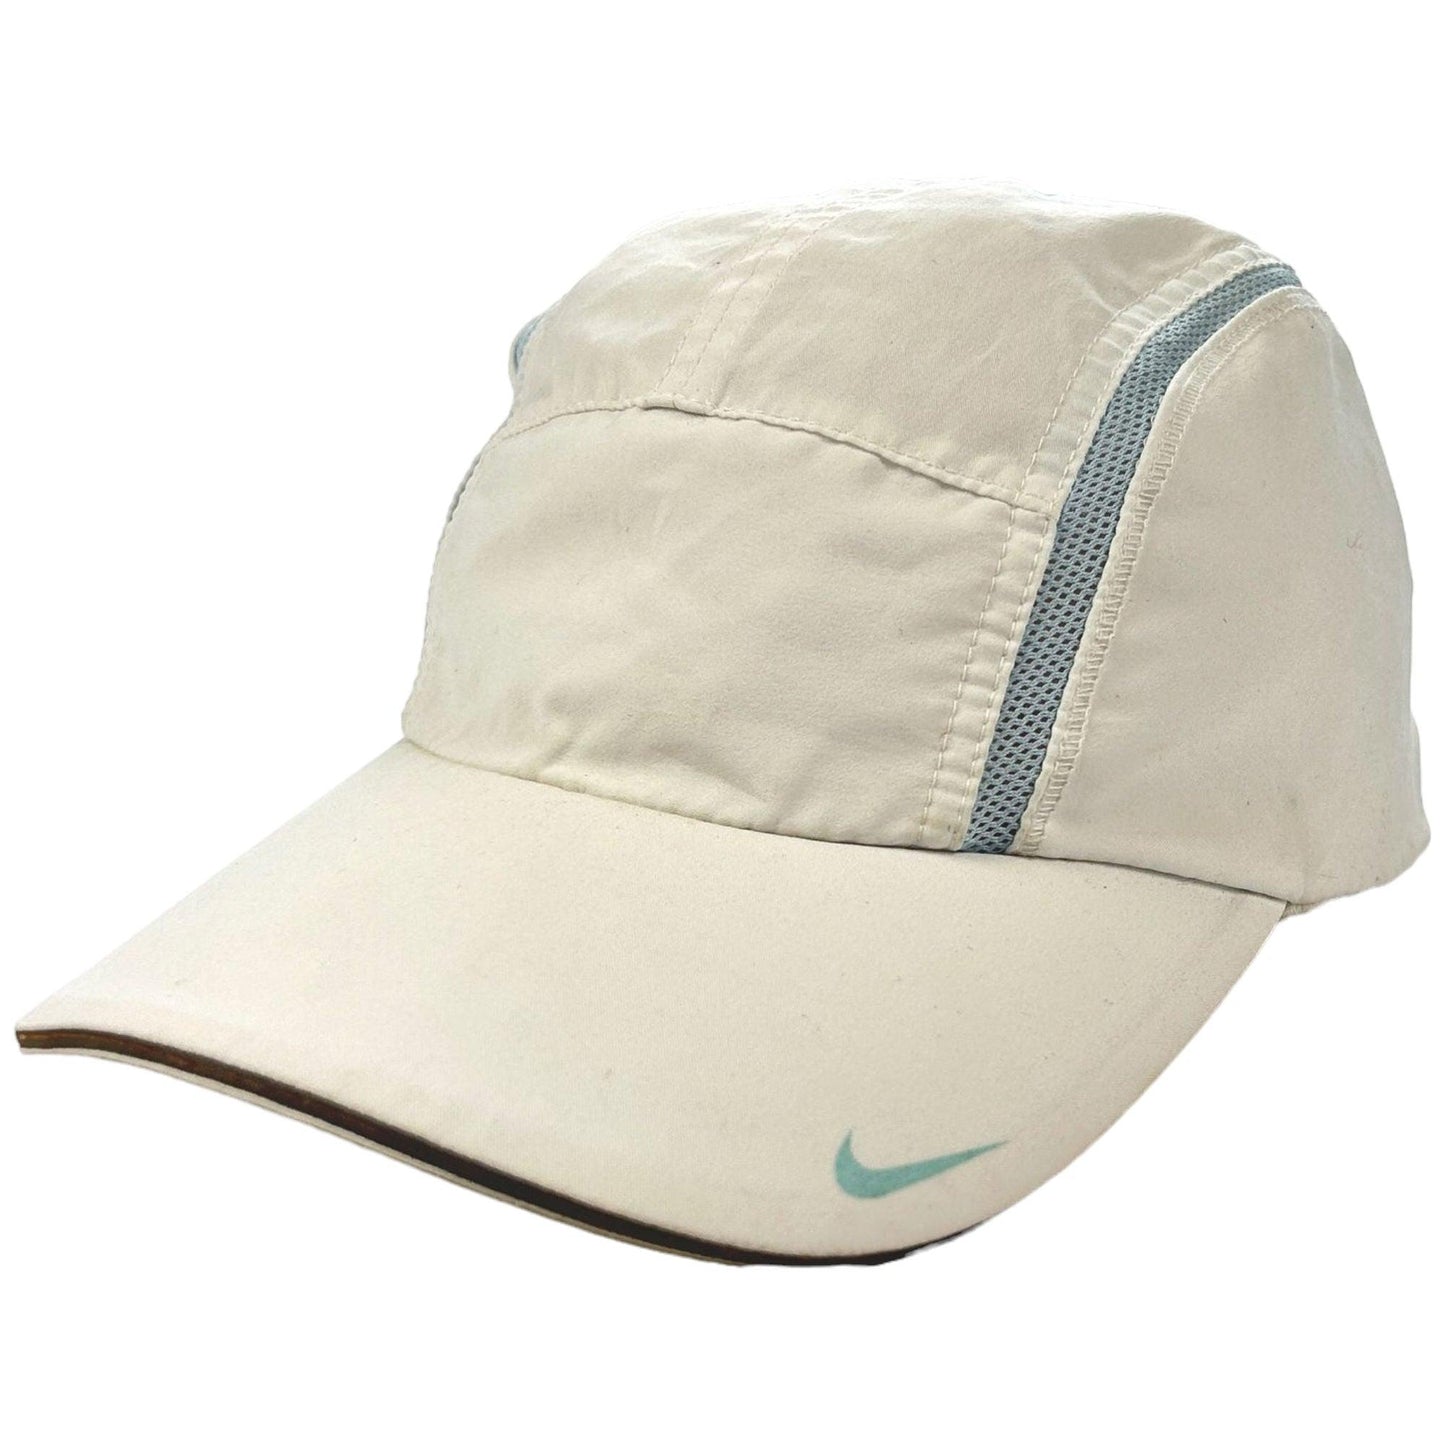 Vintage Nike Mesh Swoosh Hat - Known Source